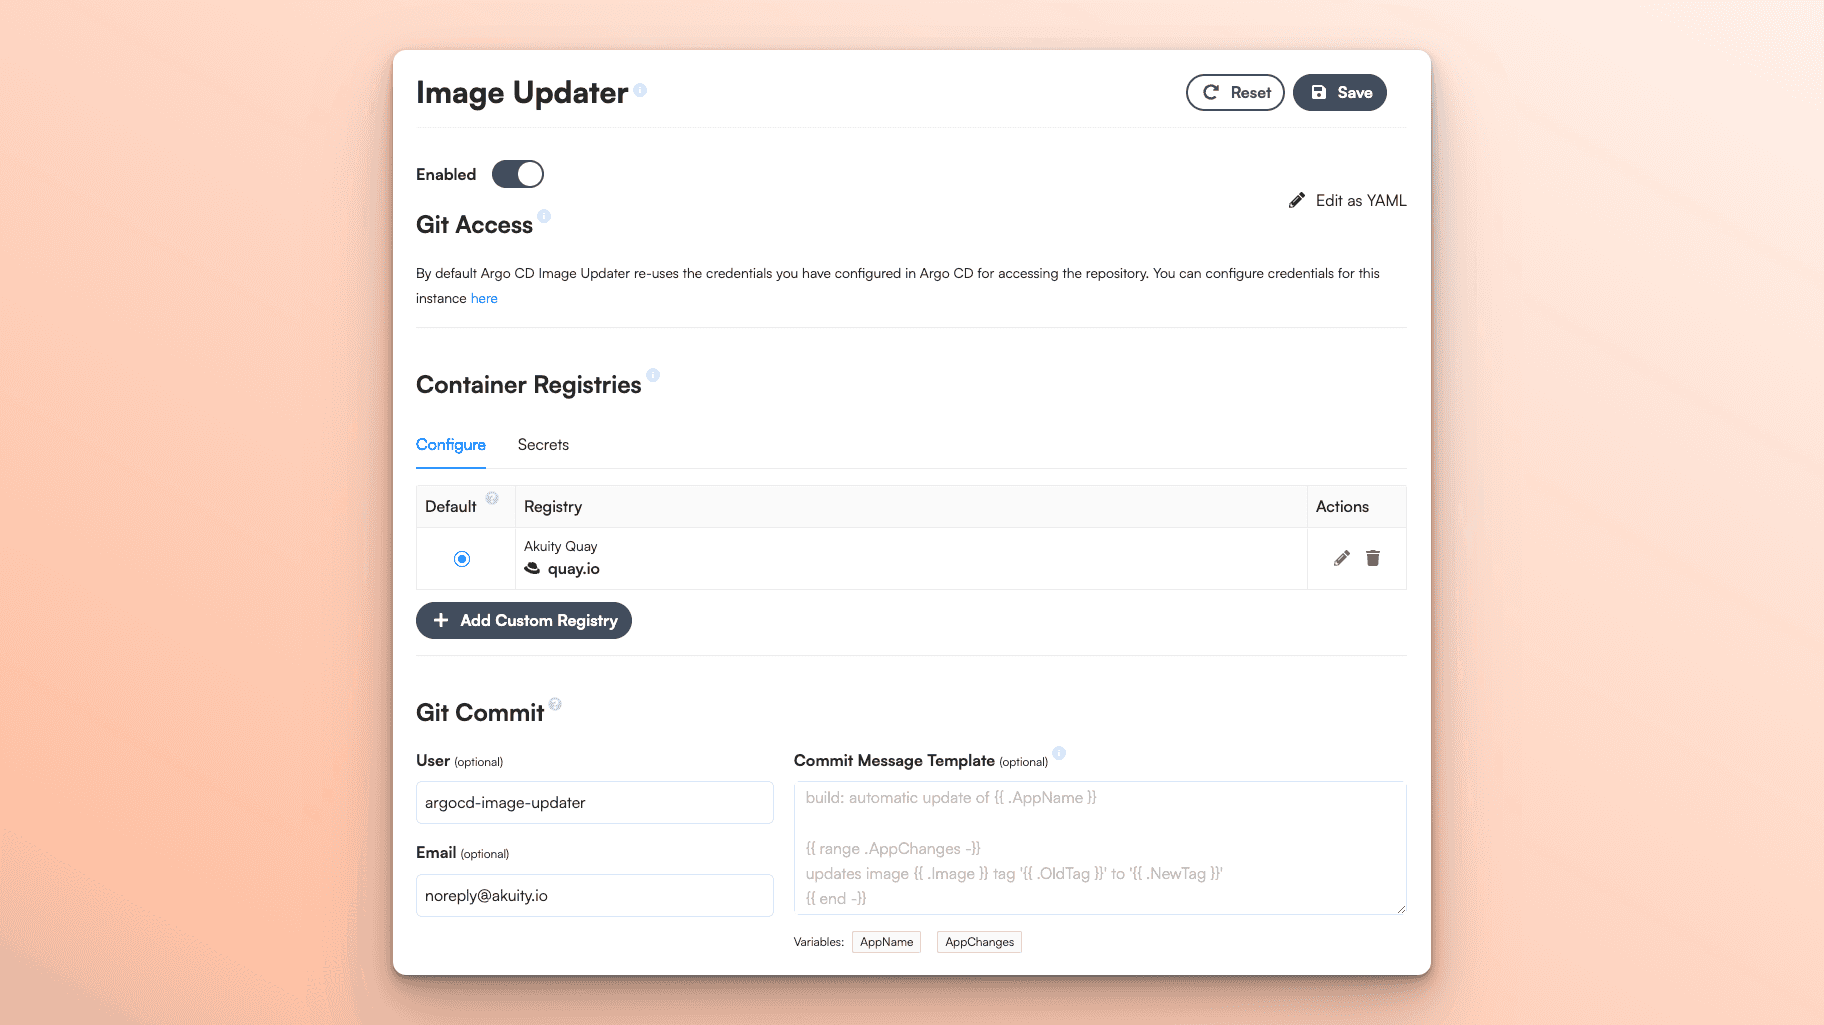 Screenshot of Image Updater settings on the Akuity Platform.